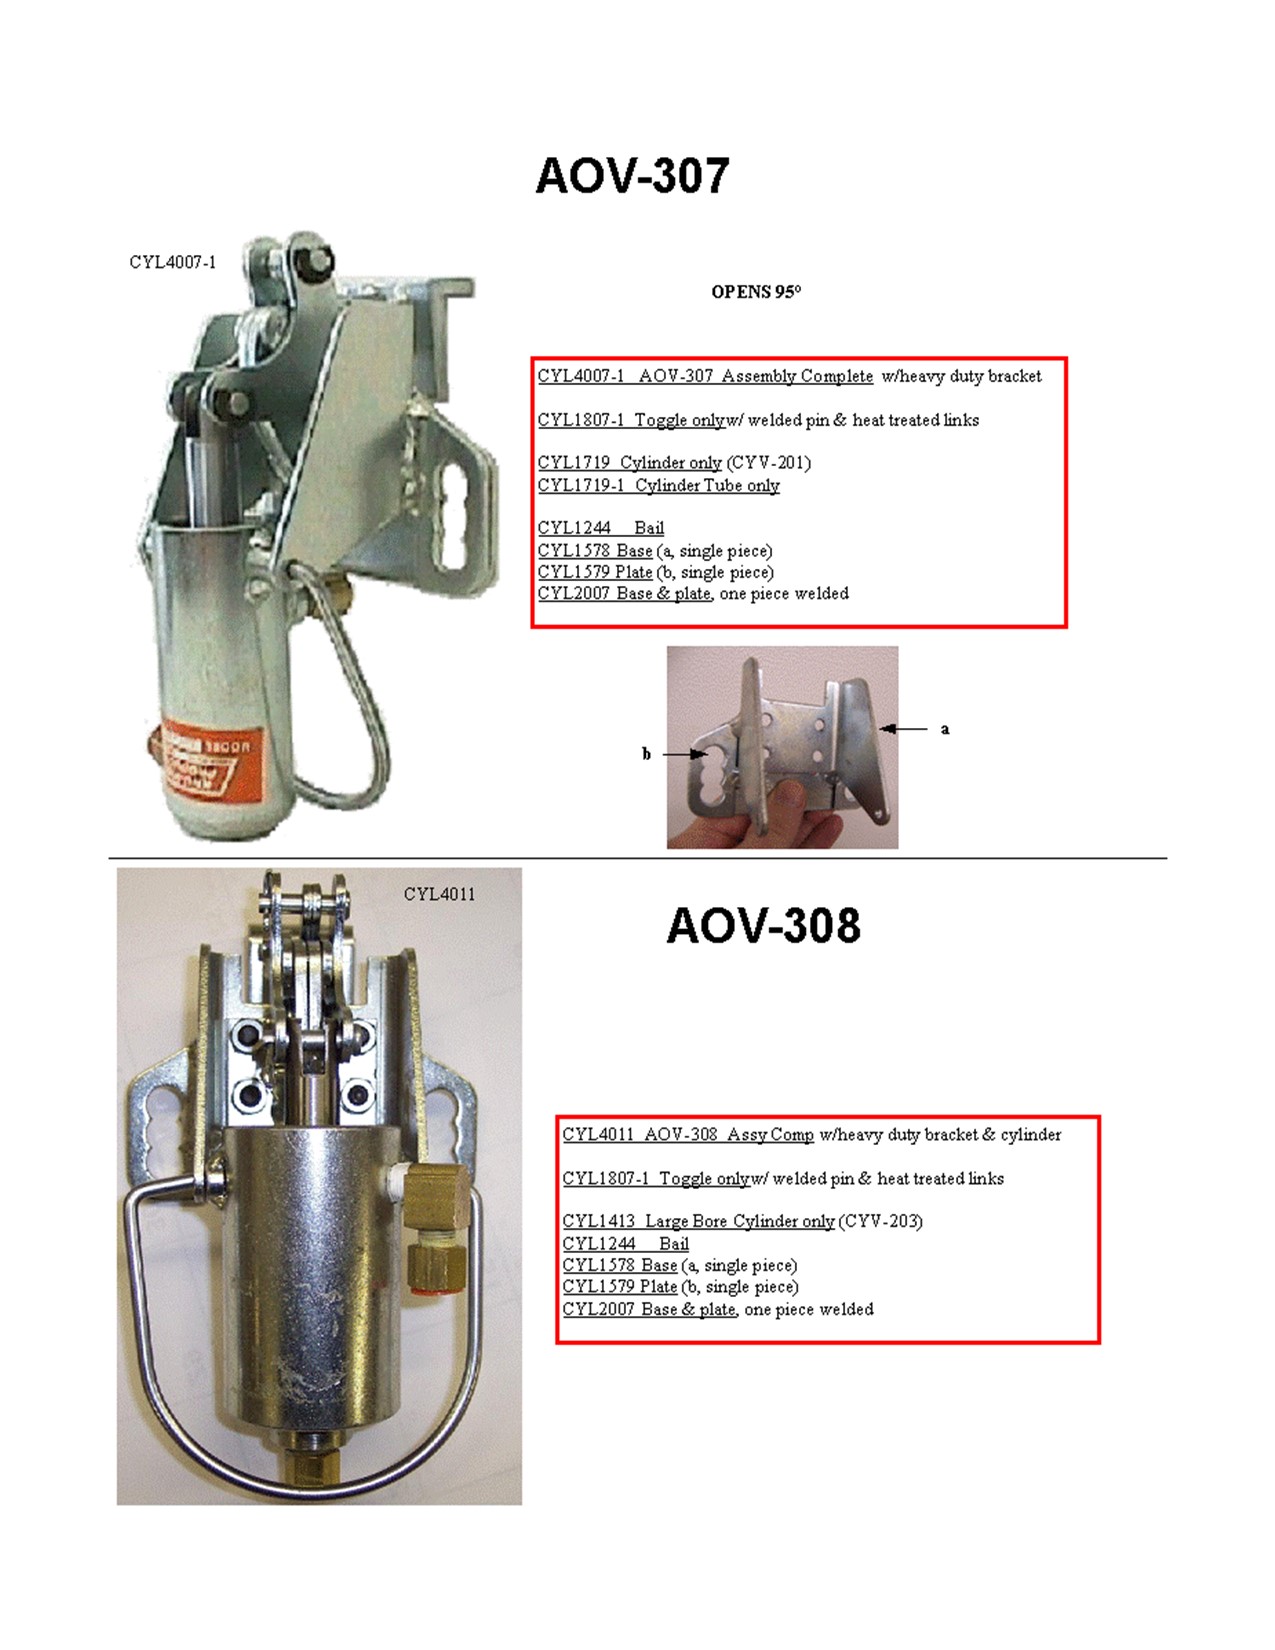 AOV-307 & AOV-308